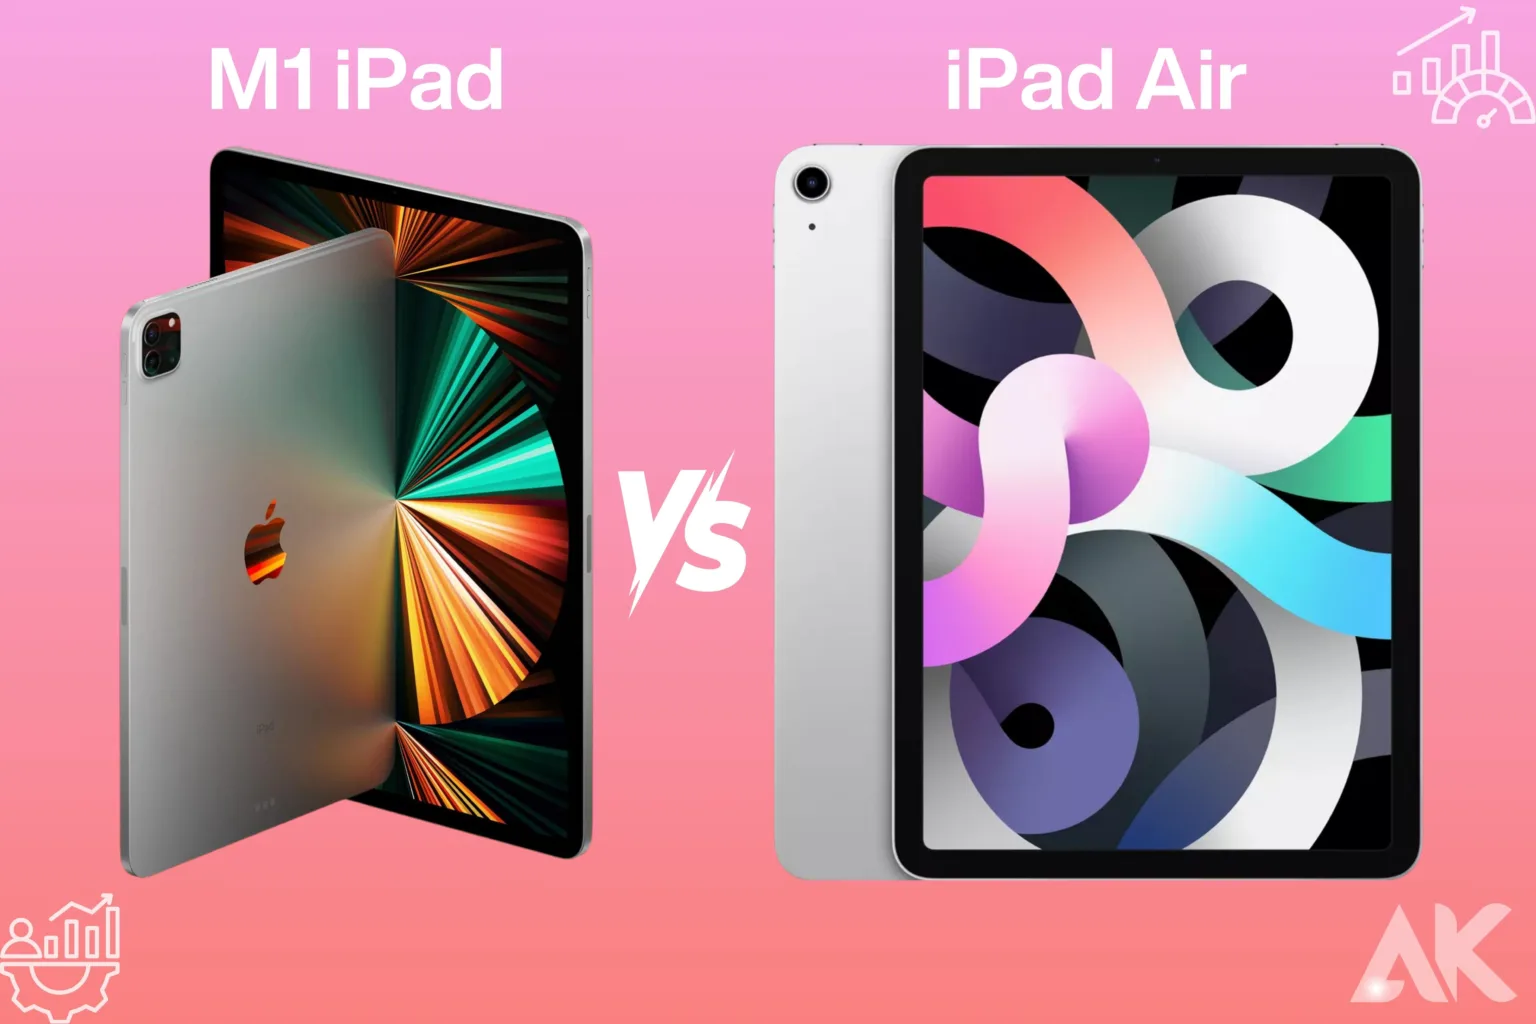 iPad Air vs M1 iPad Performance Comparison Simplified